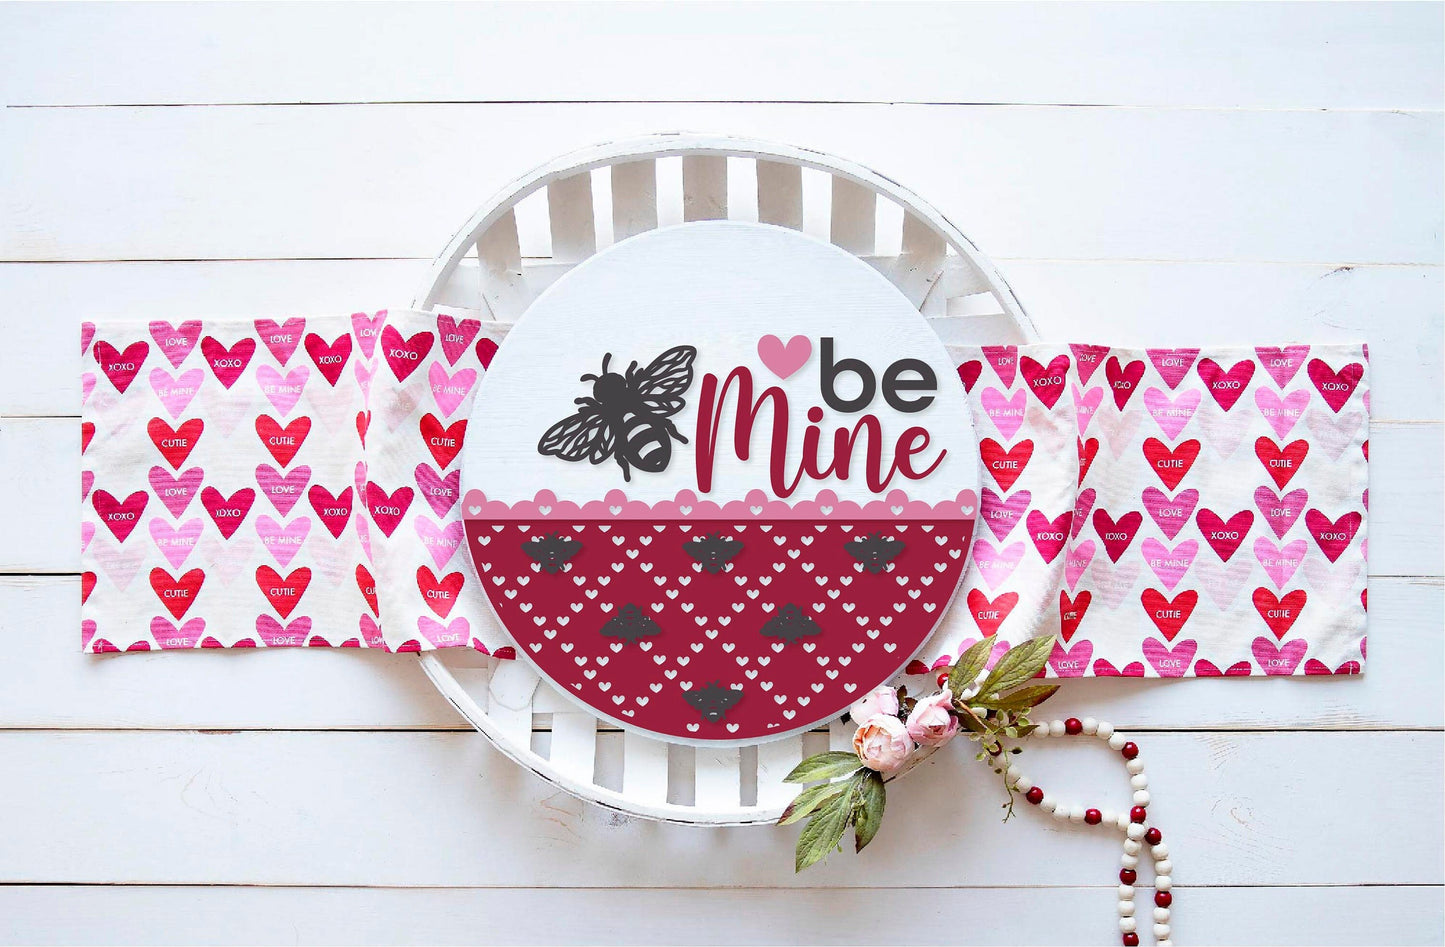 Be Mine sign SVG, Valentine Bee door hanger, Valentine Welcome, bee door round SVG, Valentines Day decor, Glowforge SVG, laser cut file